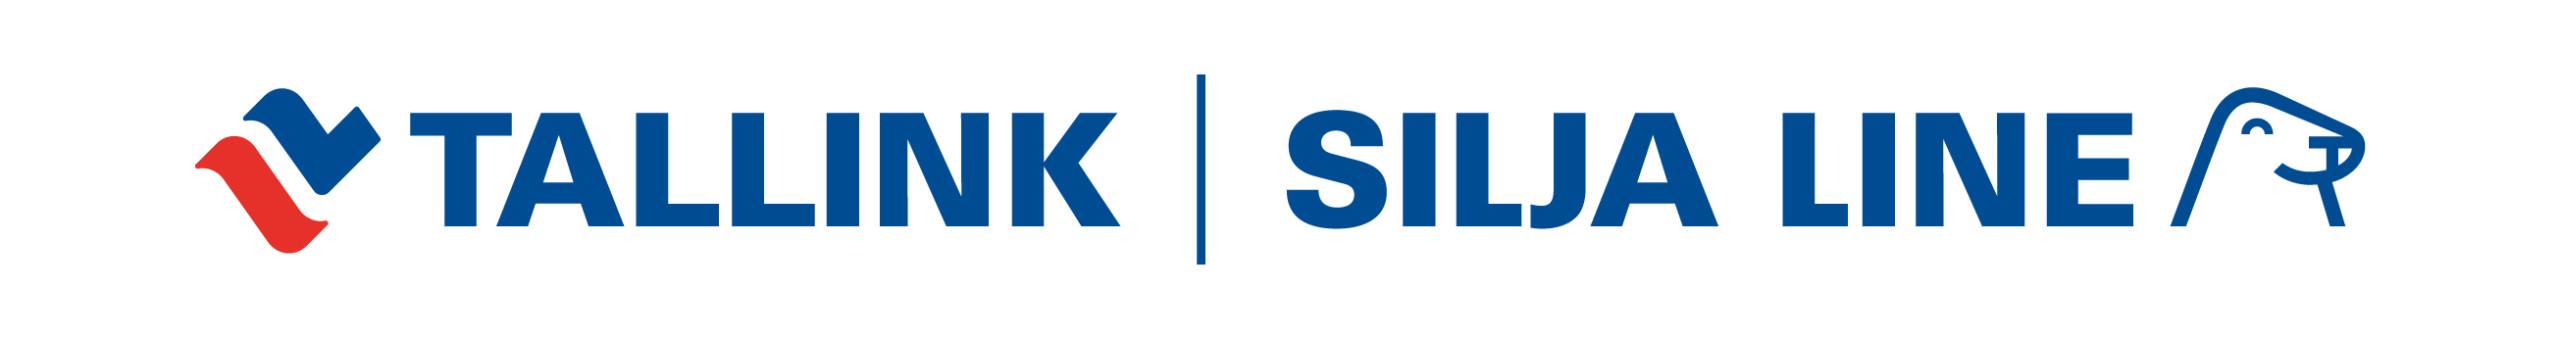 Tallink-Silja-logo.